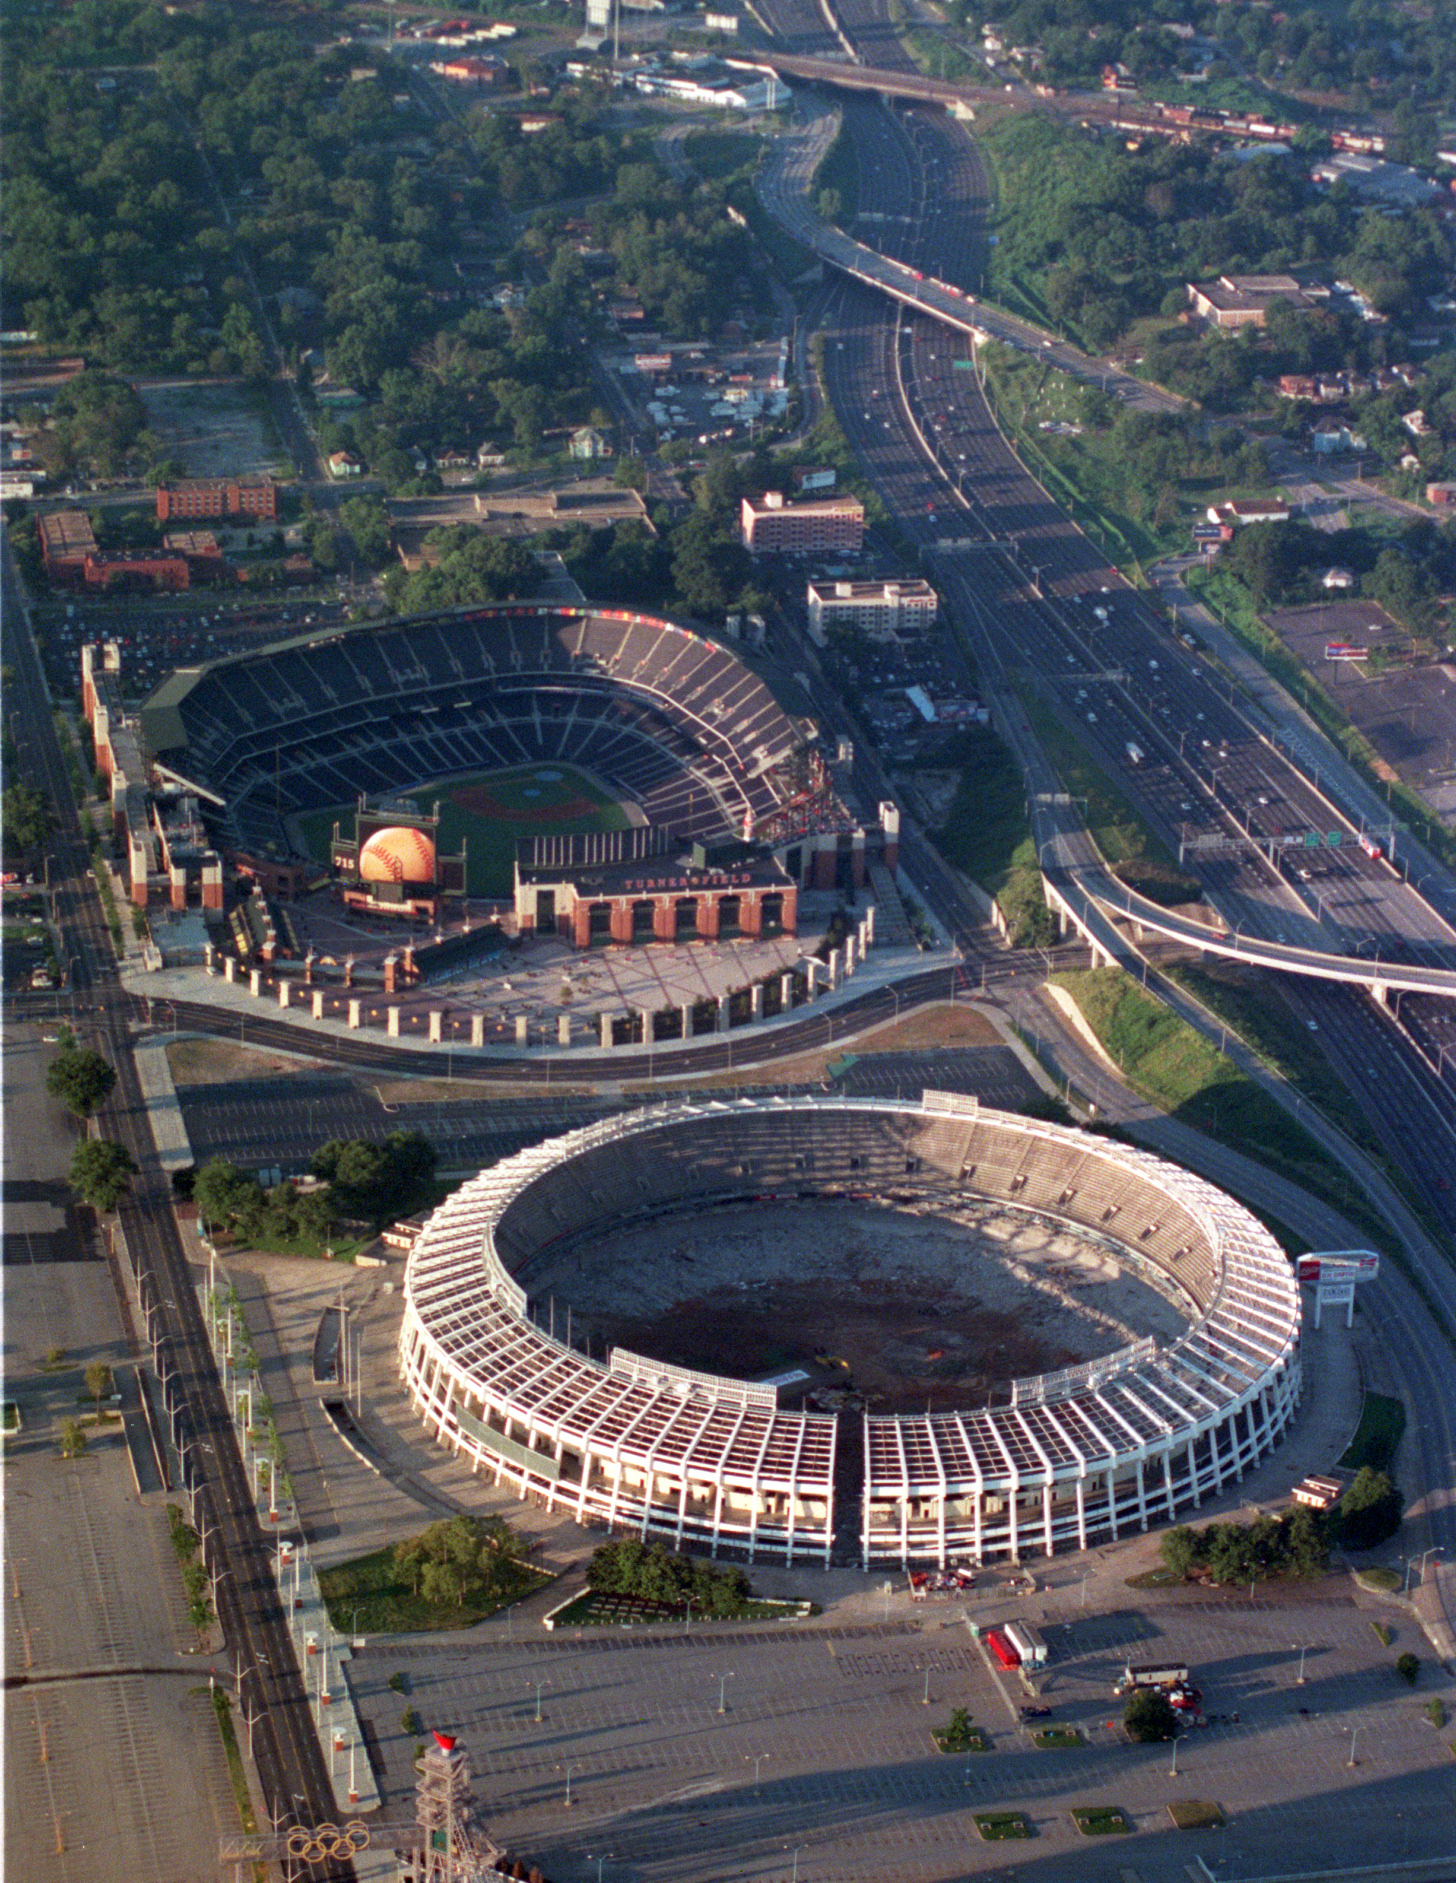 Atlanta Fulton County Stadium - History, Photos and more of the